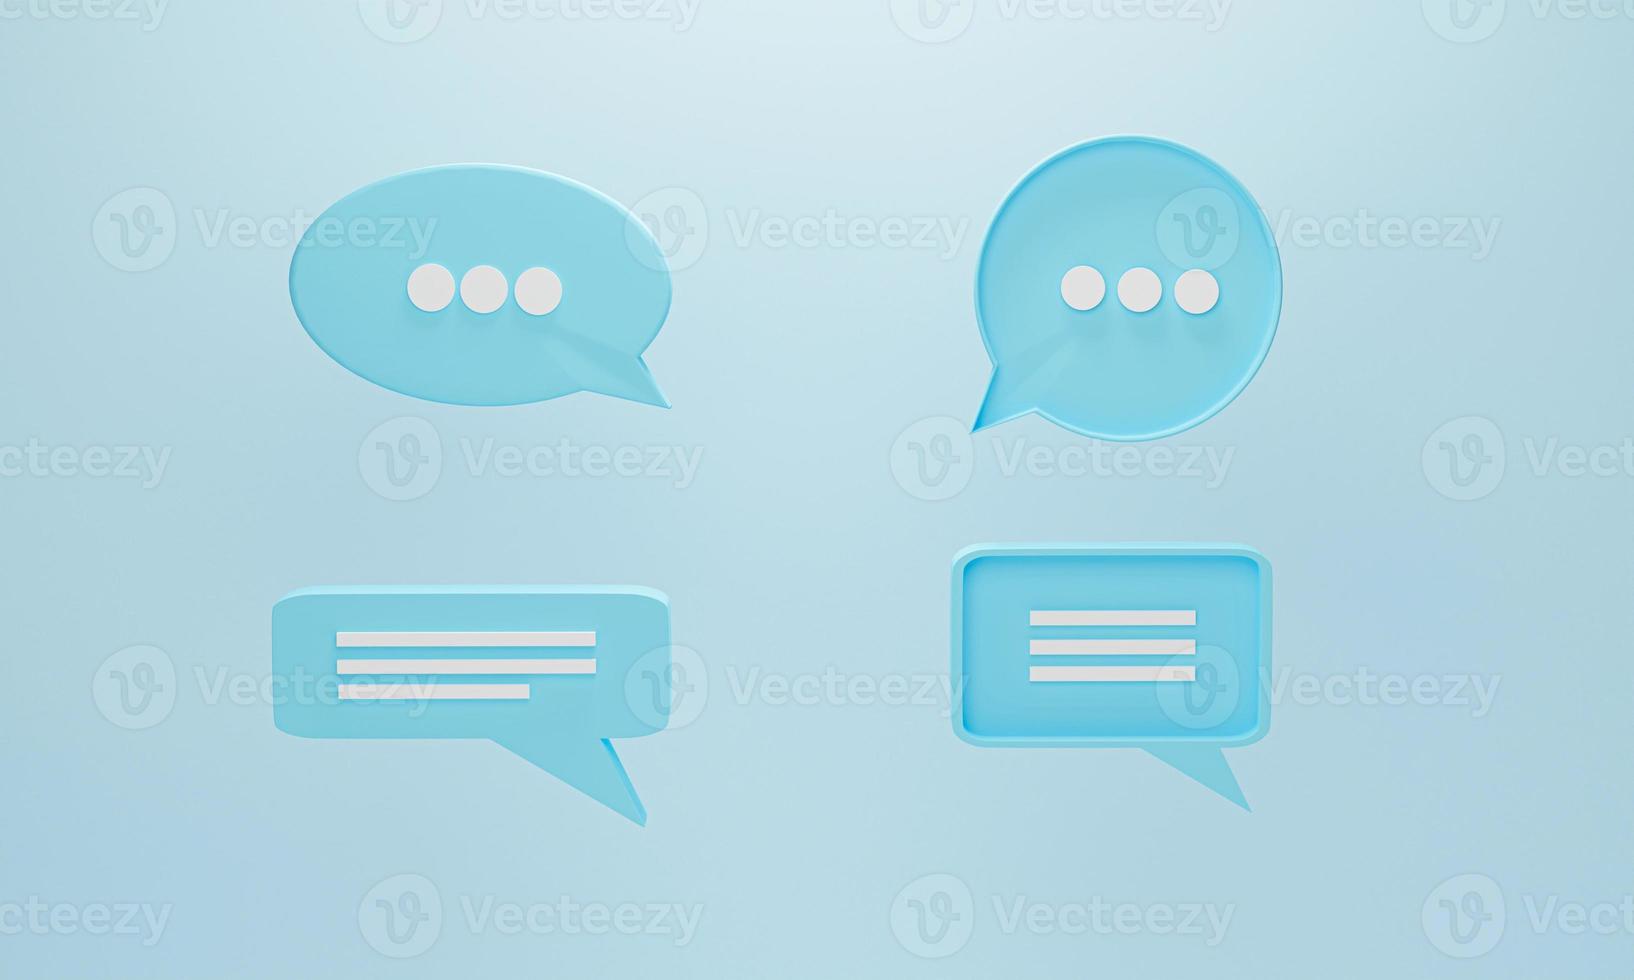 conjunto de 4 iconos de burbujas de chat o símbolo de burbujas de voz sobre fondo azul pastel. concepto de chat, comunicación o diálogo. ilustración de representación 3d. foto